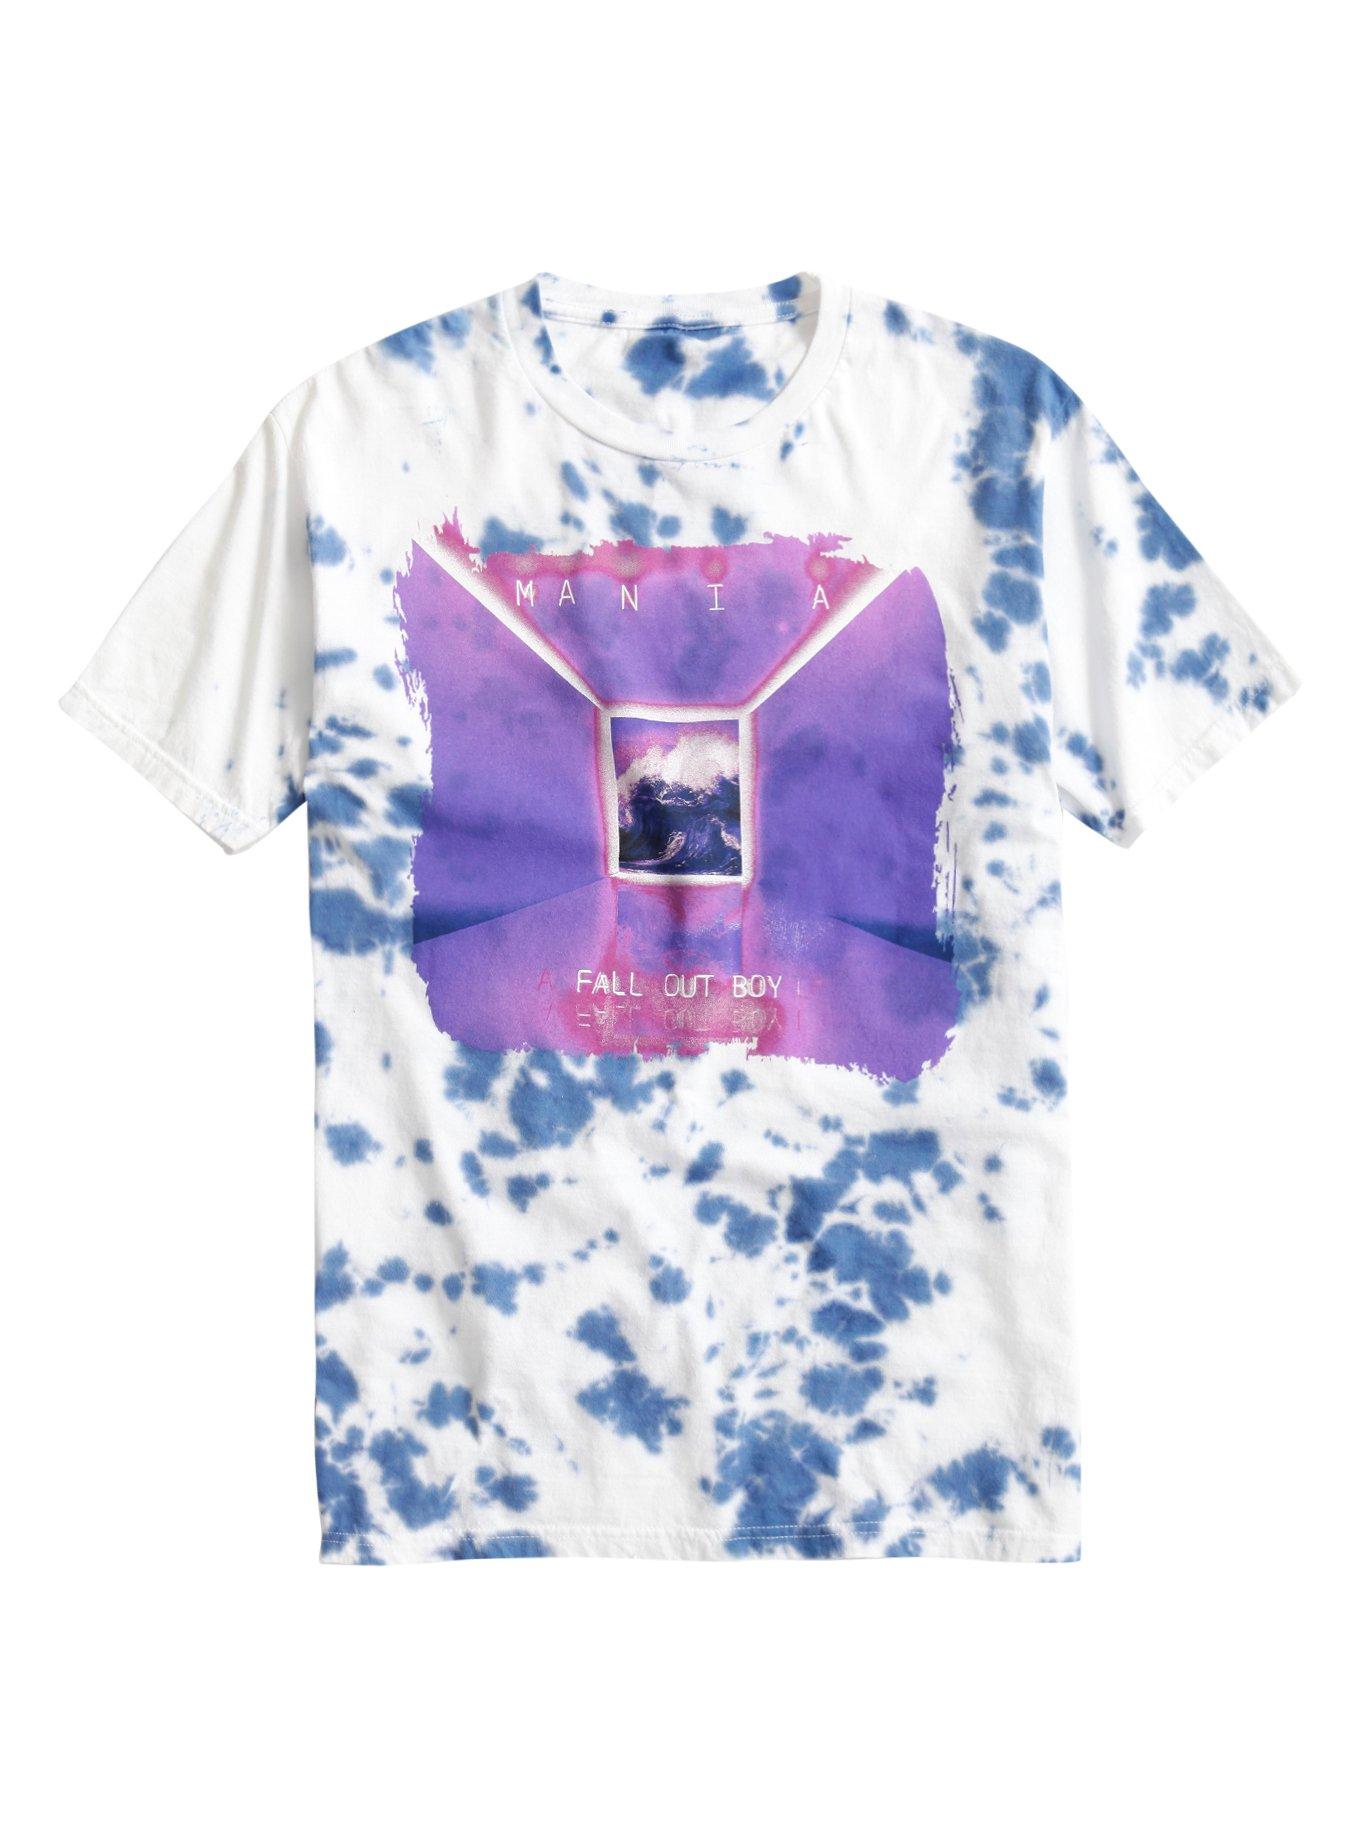 Fall Out Boy Mania Tie-Dye T-Shirt, PURPLE, hi-res